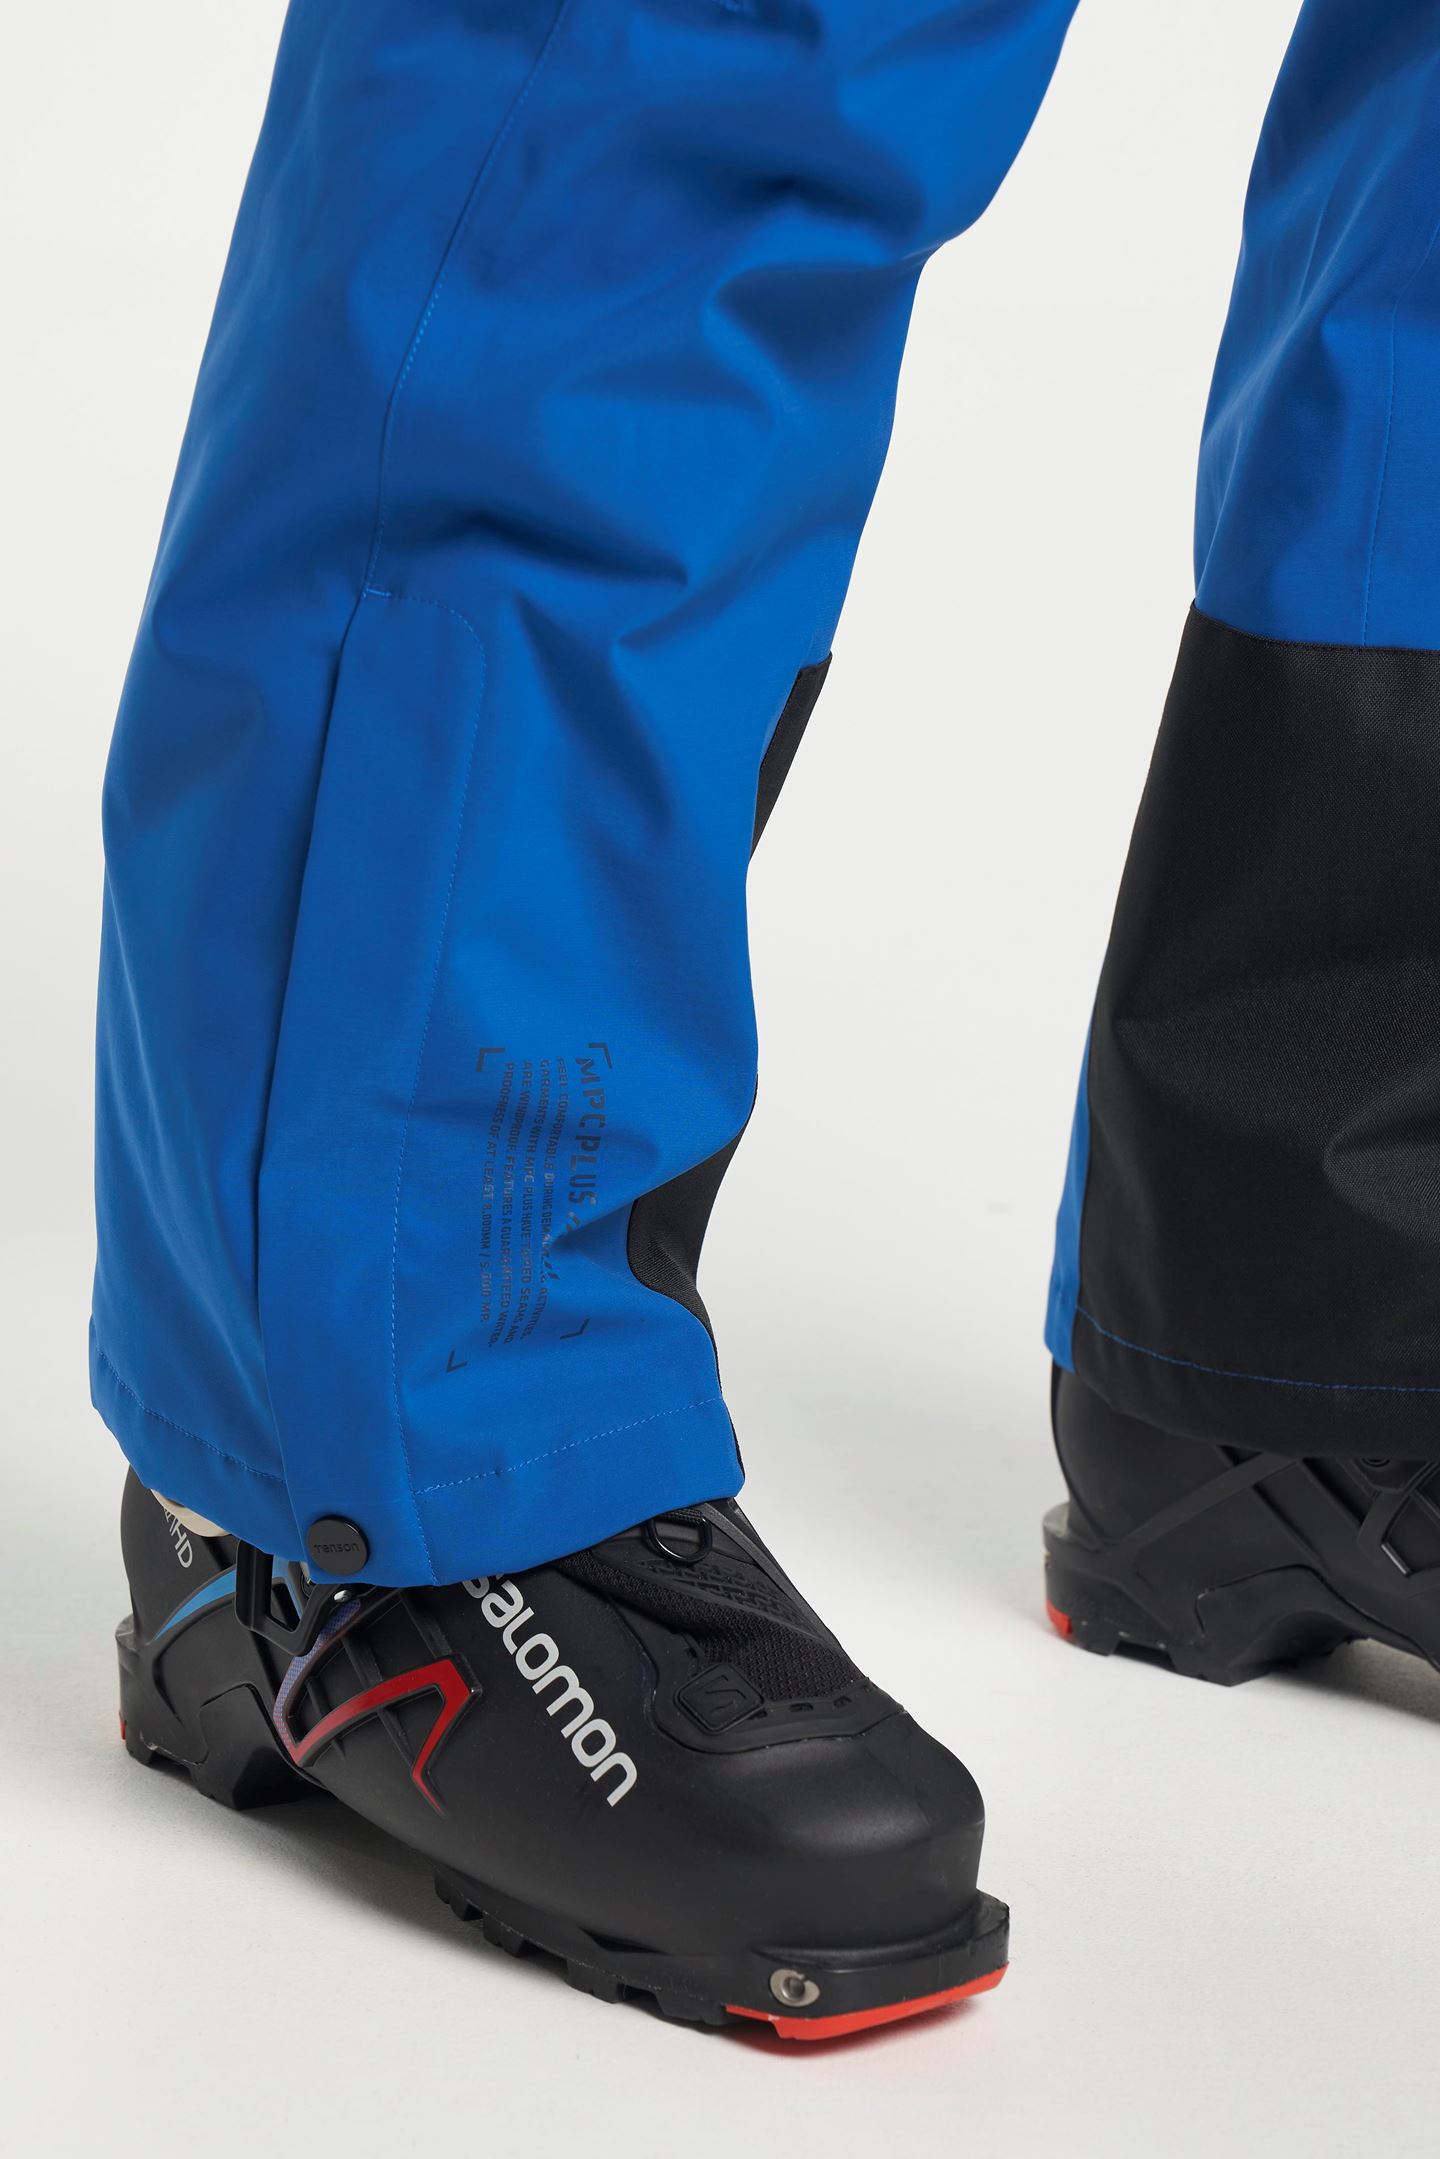 Core Ski Pants - Women's Ski Pants with Removable Braces - Coral